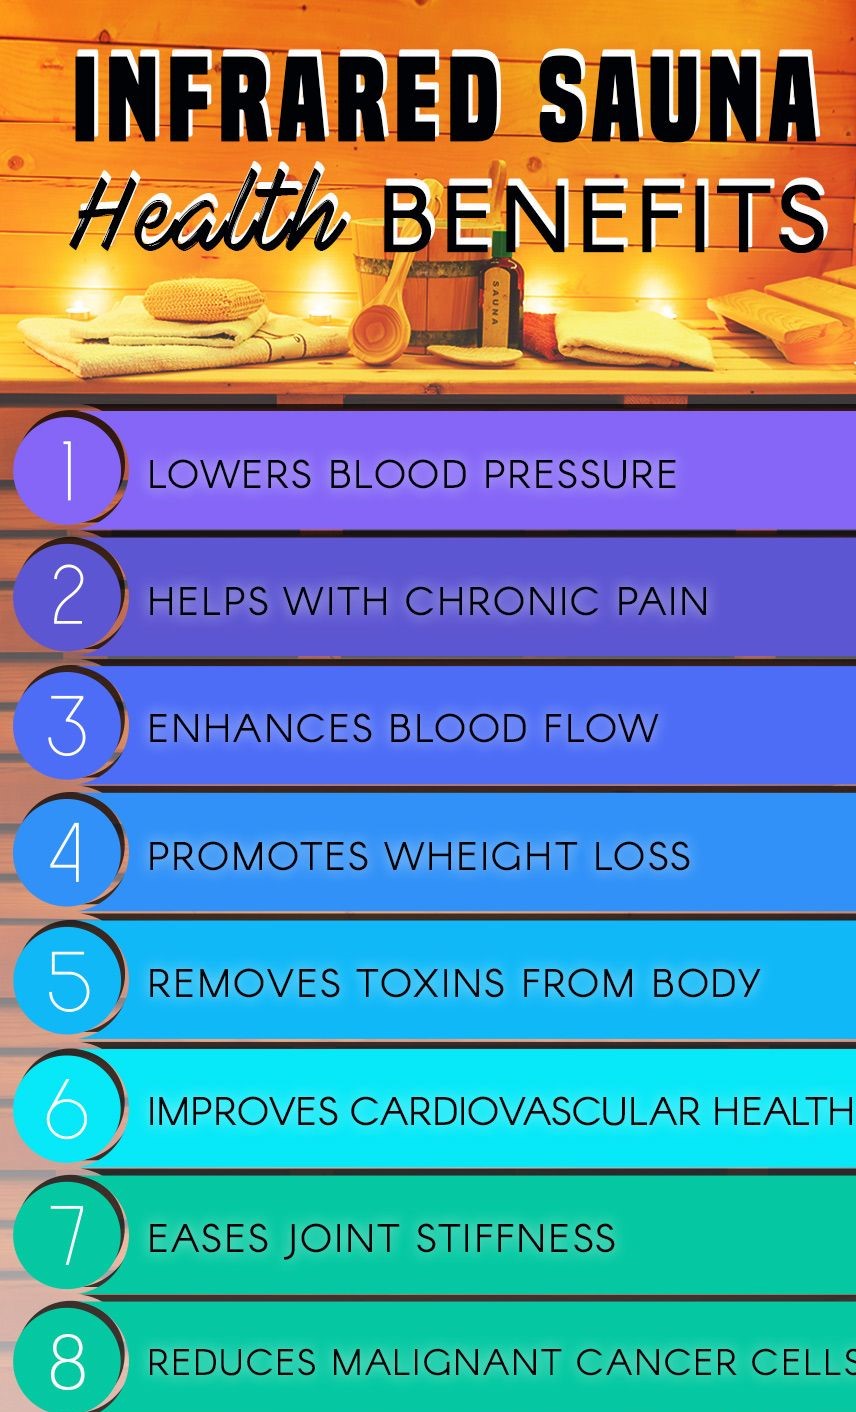 Health benefits of infrared sauna